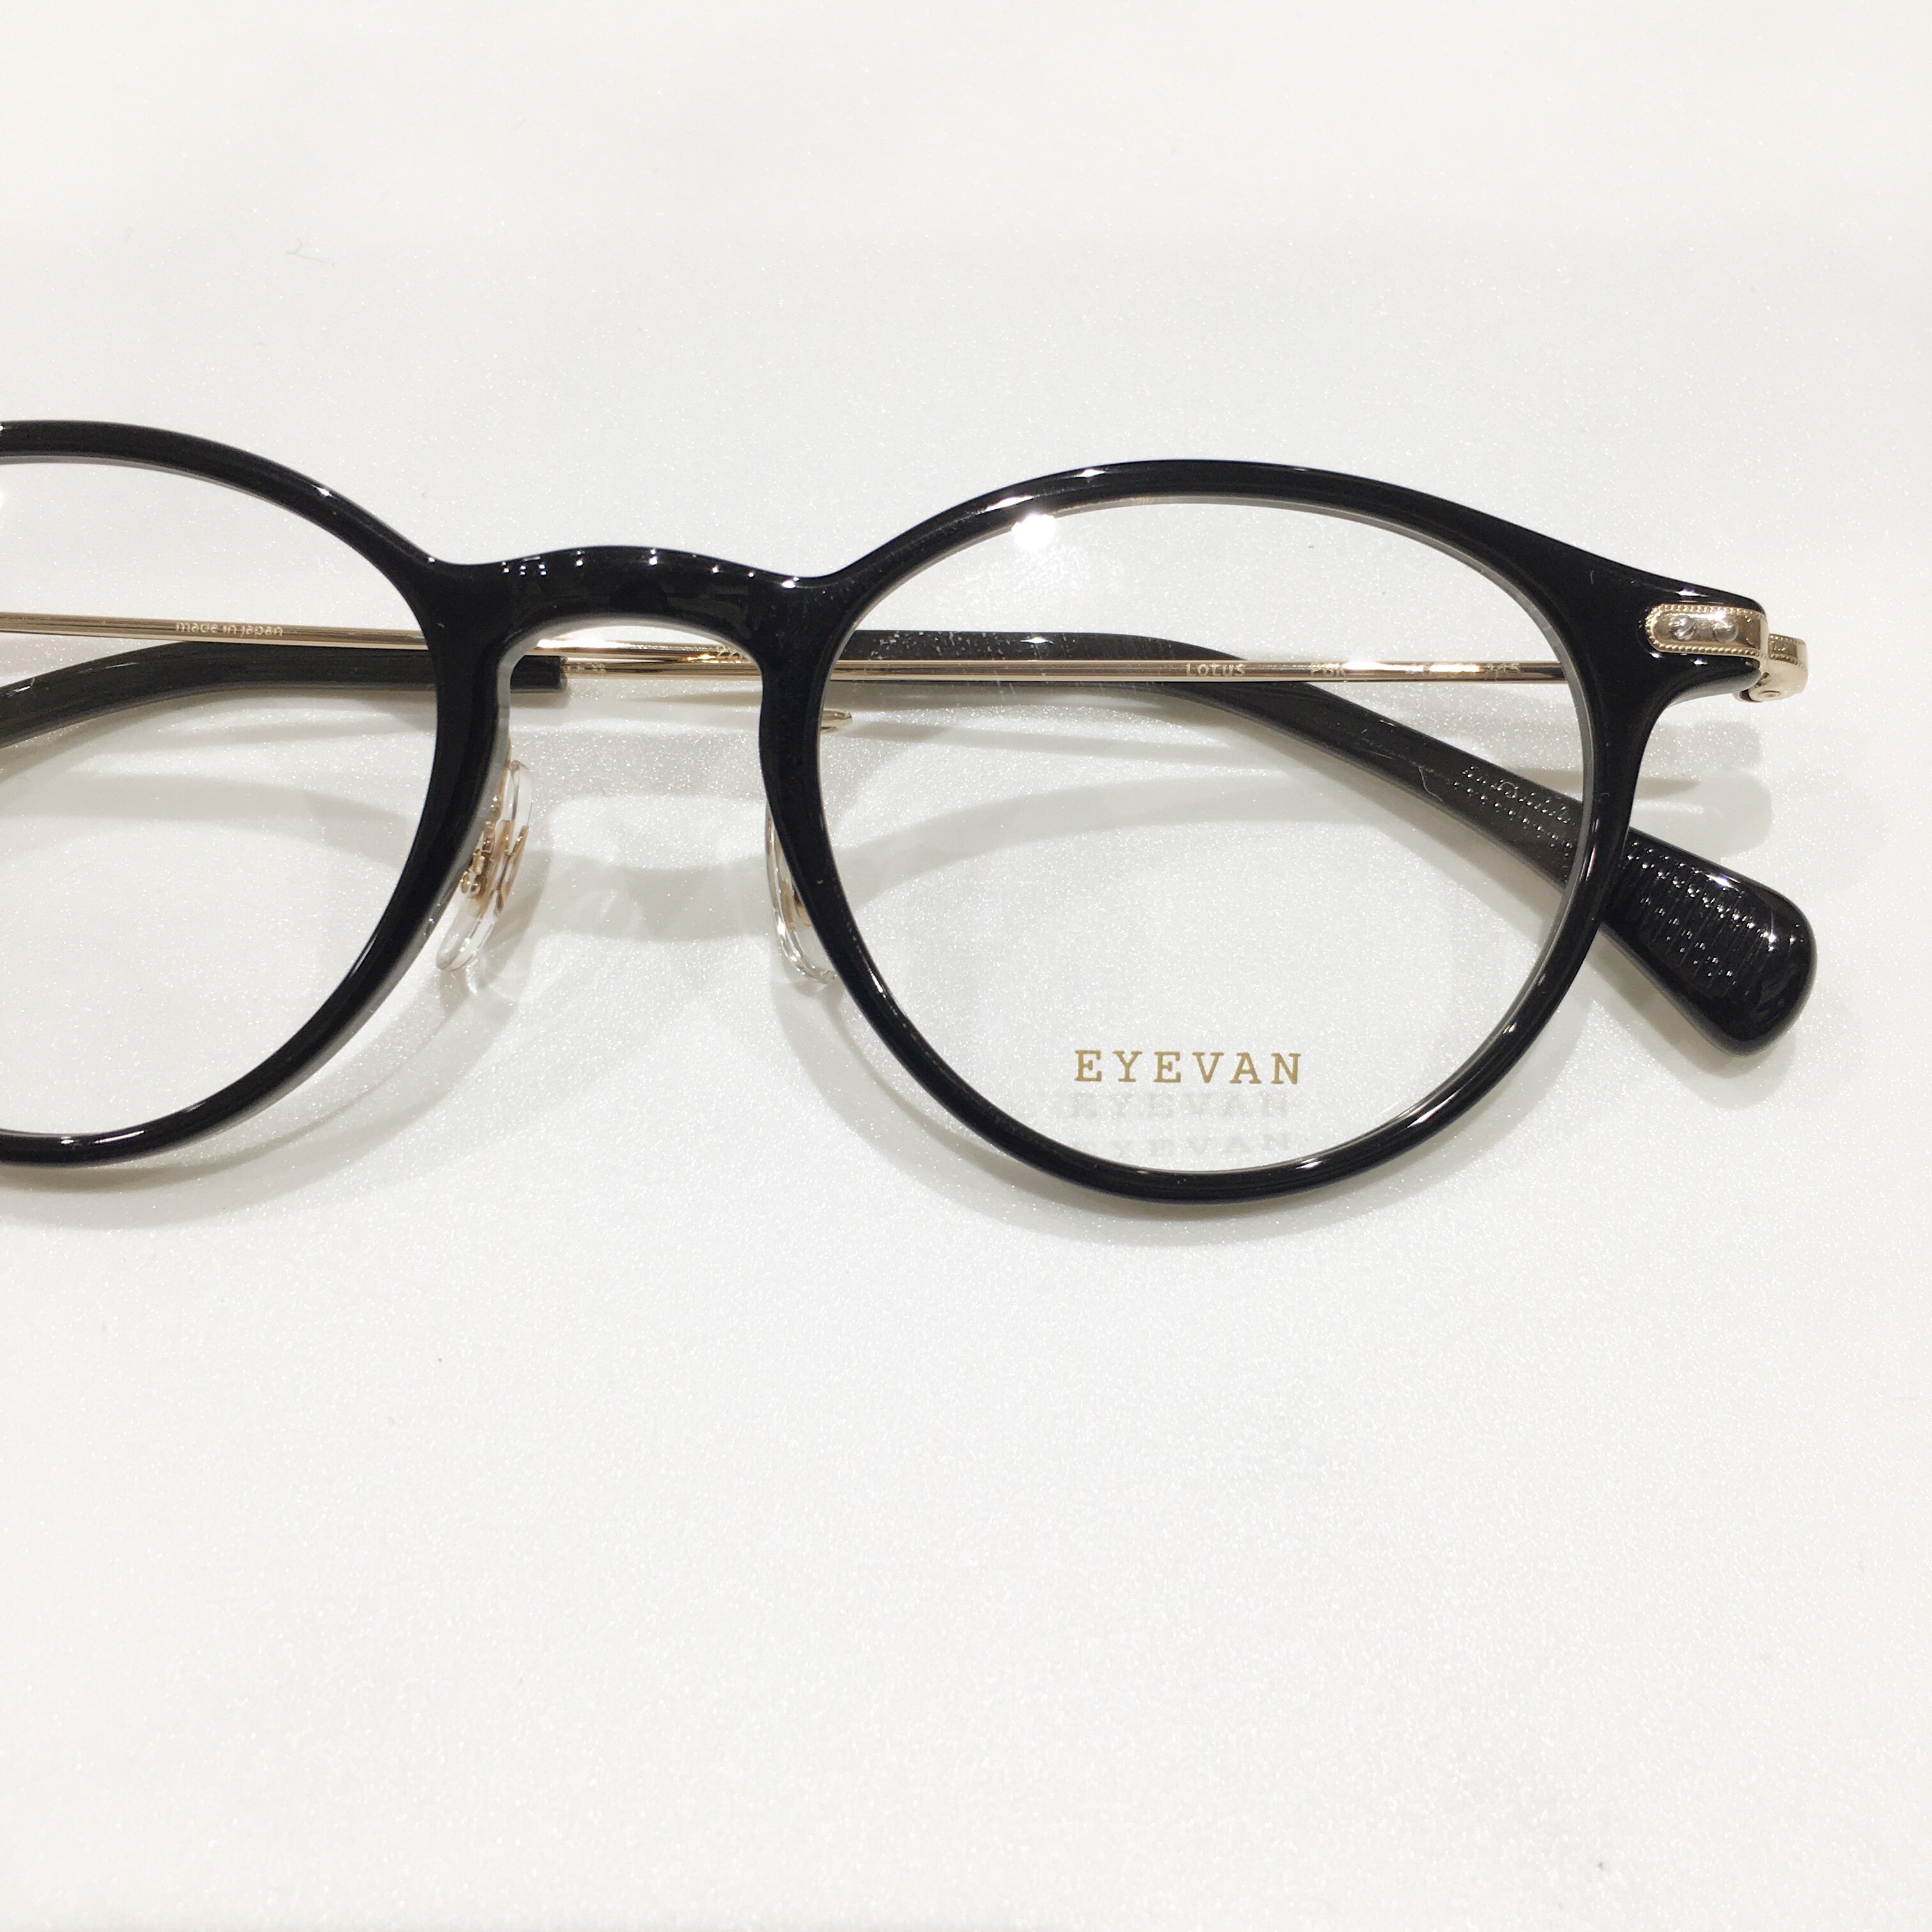 【EYEVAN】きれいめファッションにも合わせやすい黒縁メガネ♪